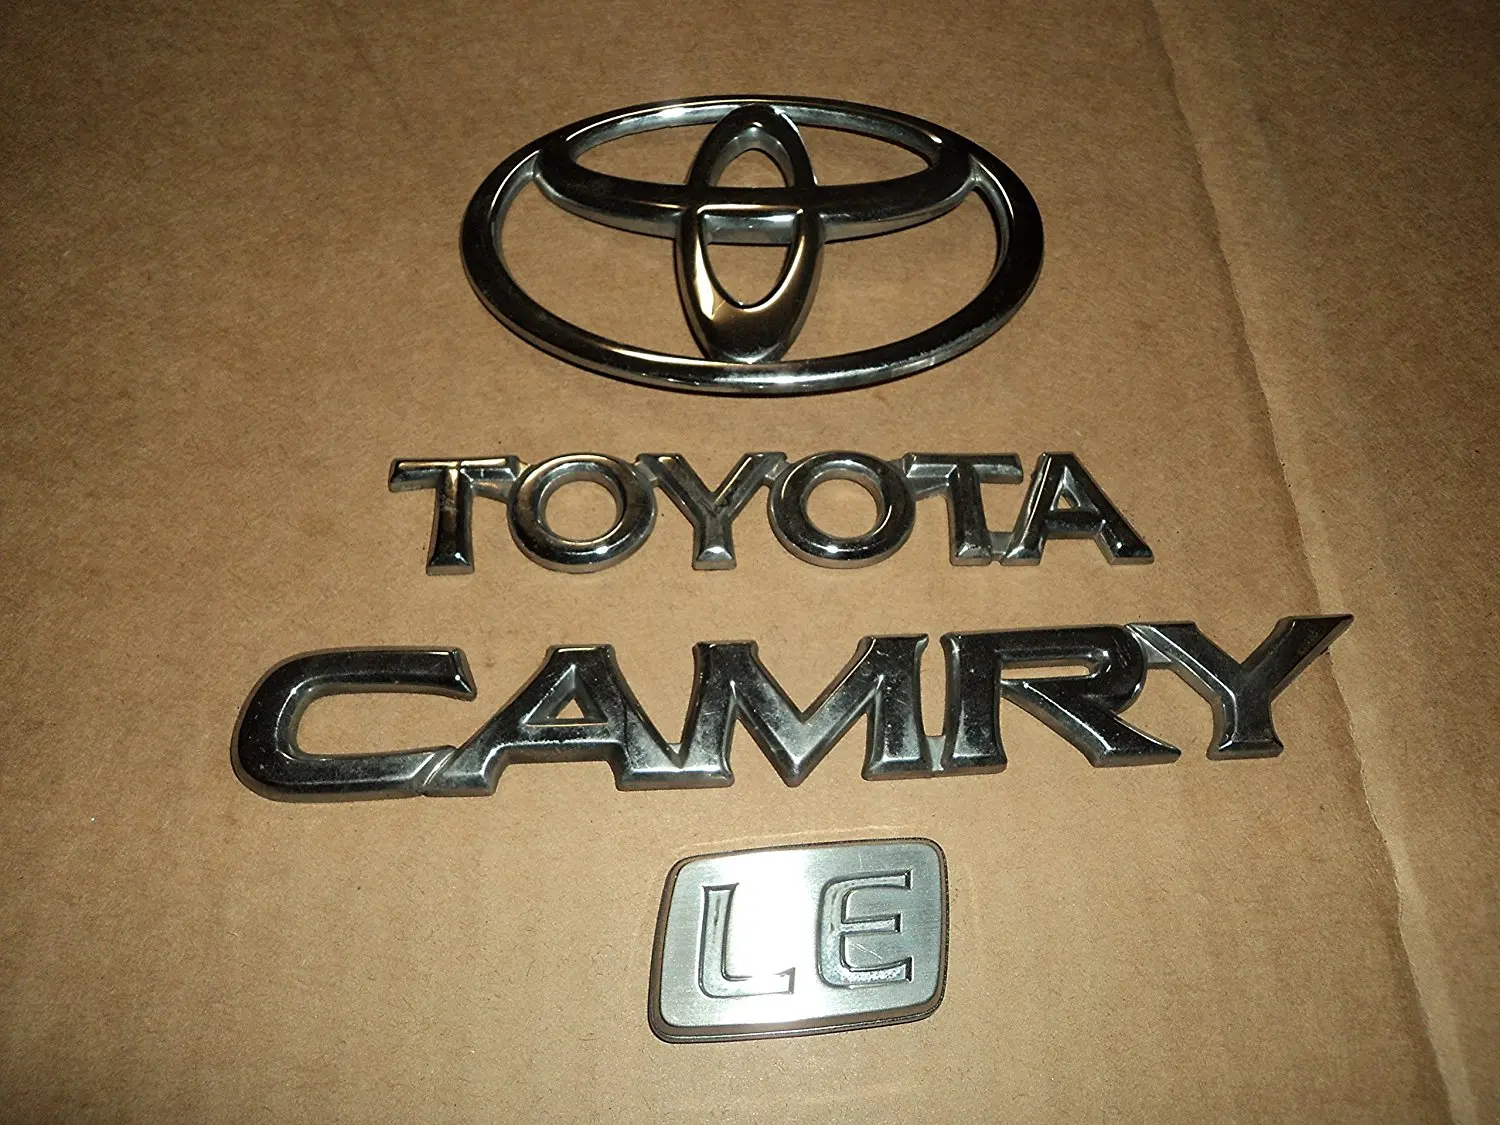 Toyota Camry logo